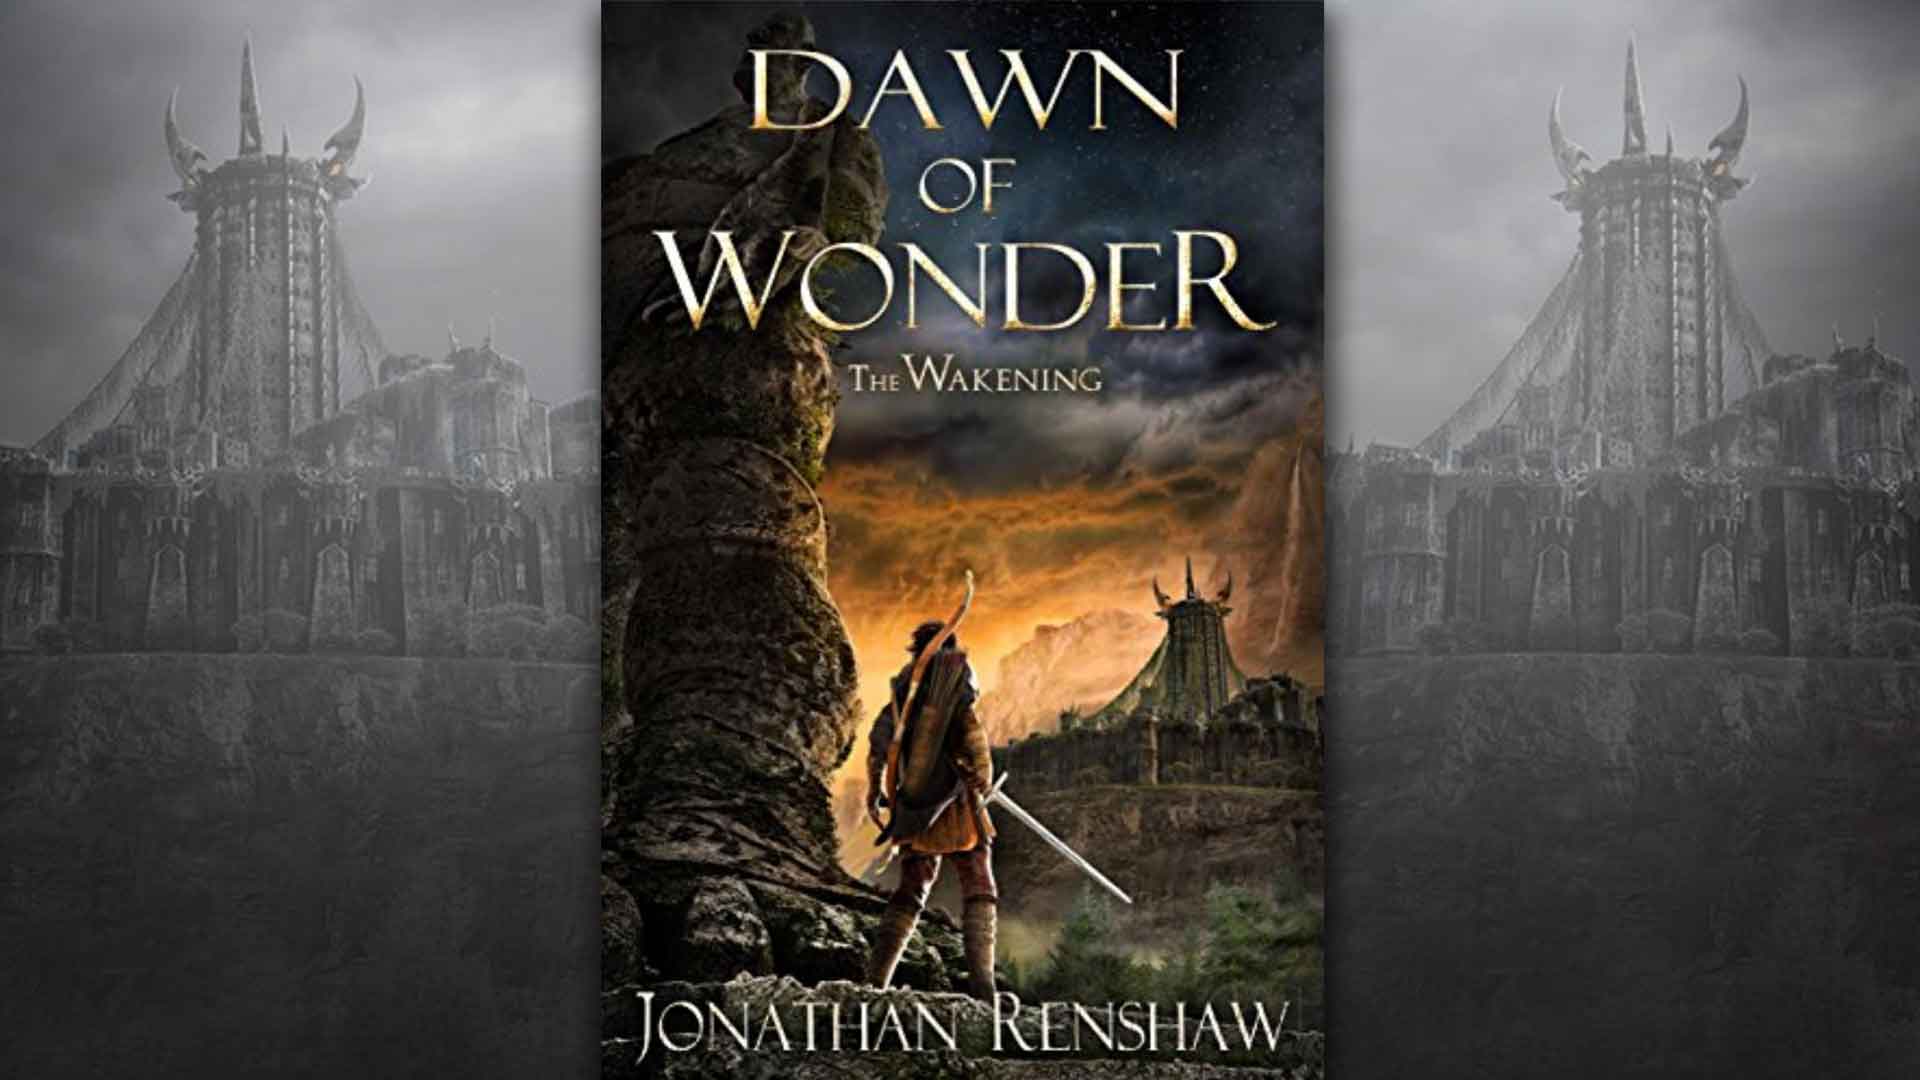 dawn of wonder by jonathan renshaw